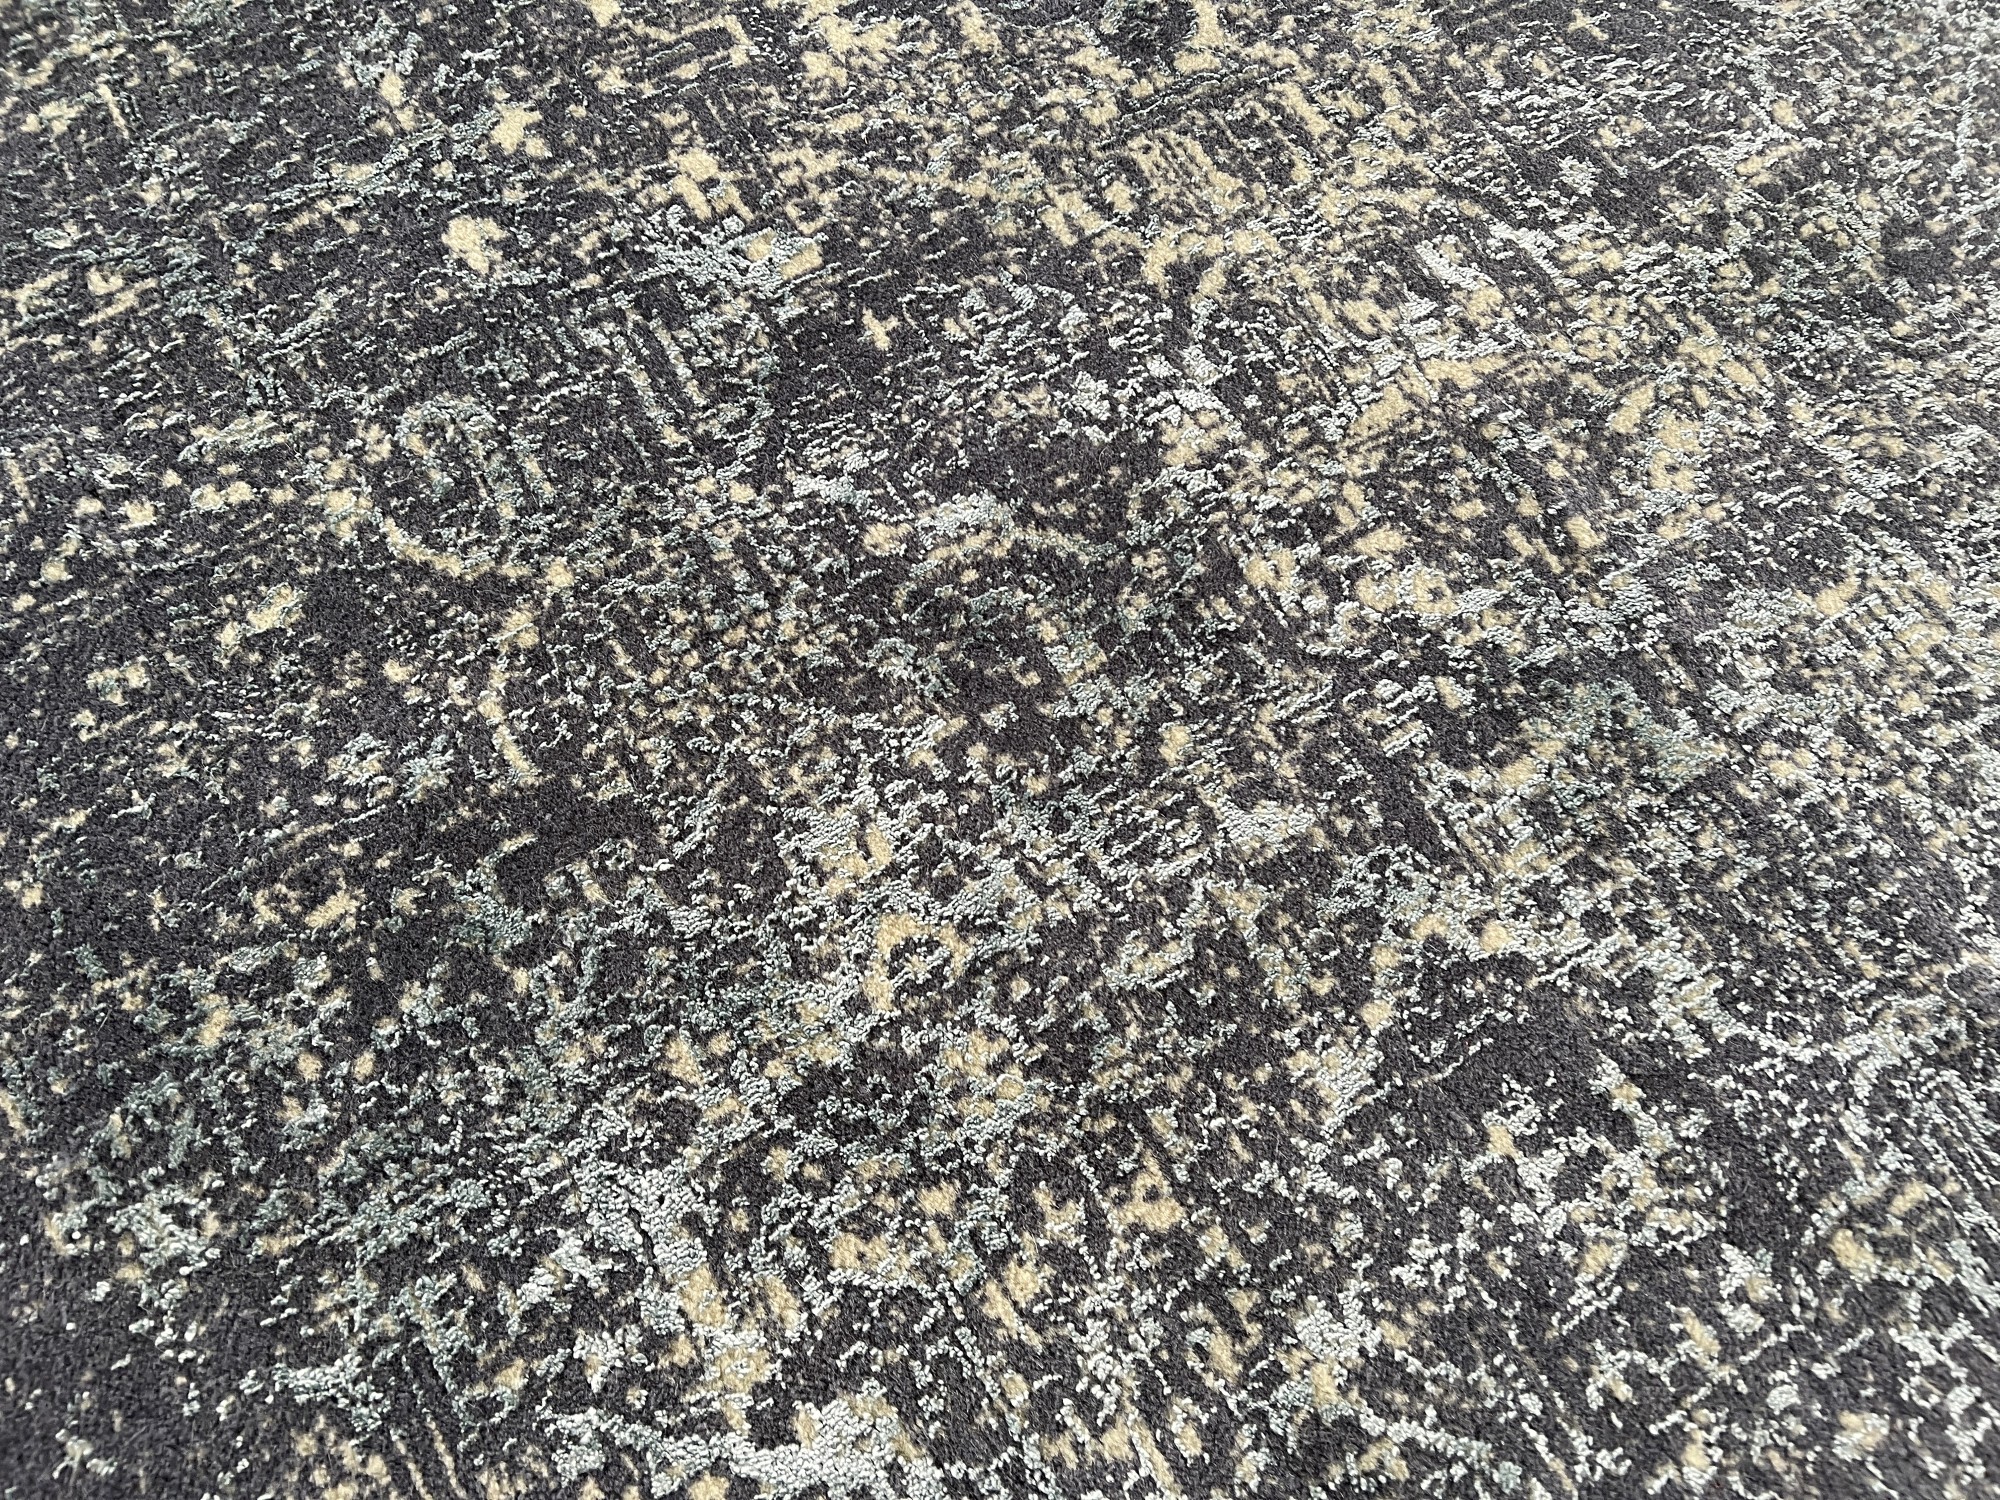 فرش پشمی ماشینی طبیعی و ارگانیک کد 0020 - زمینه طوسی پر رنگ - حاشیه آبی کم رنگ